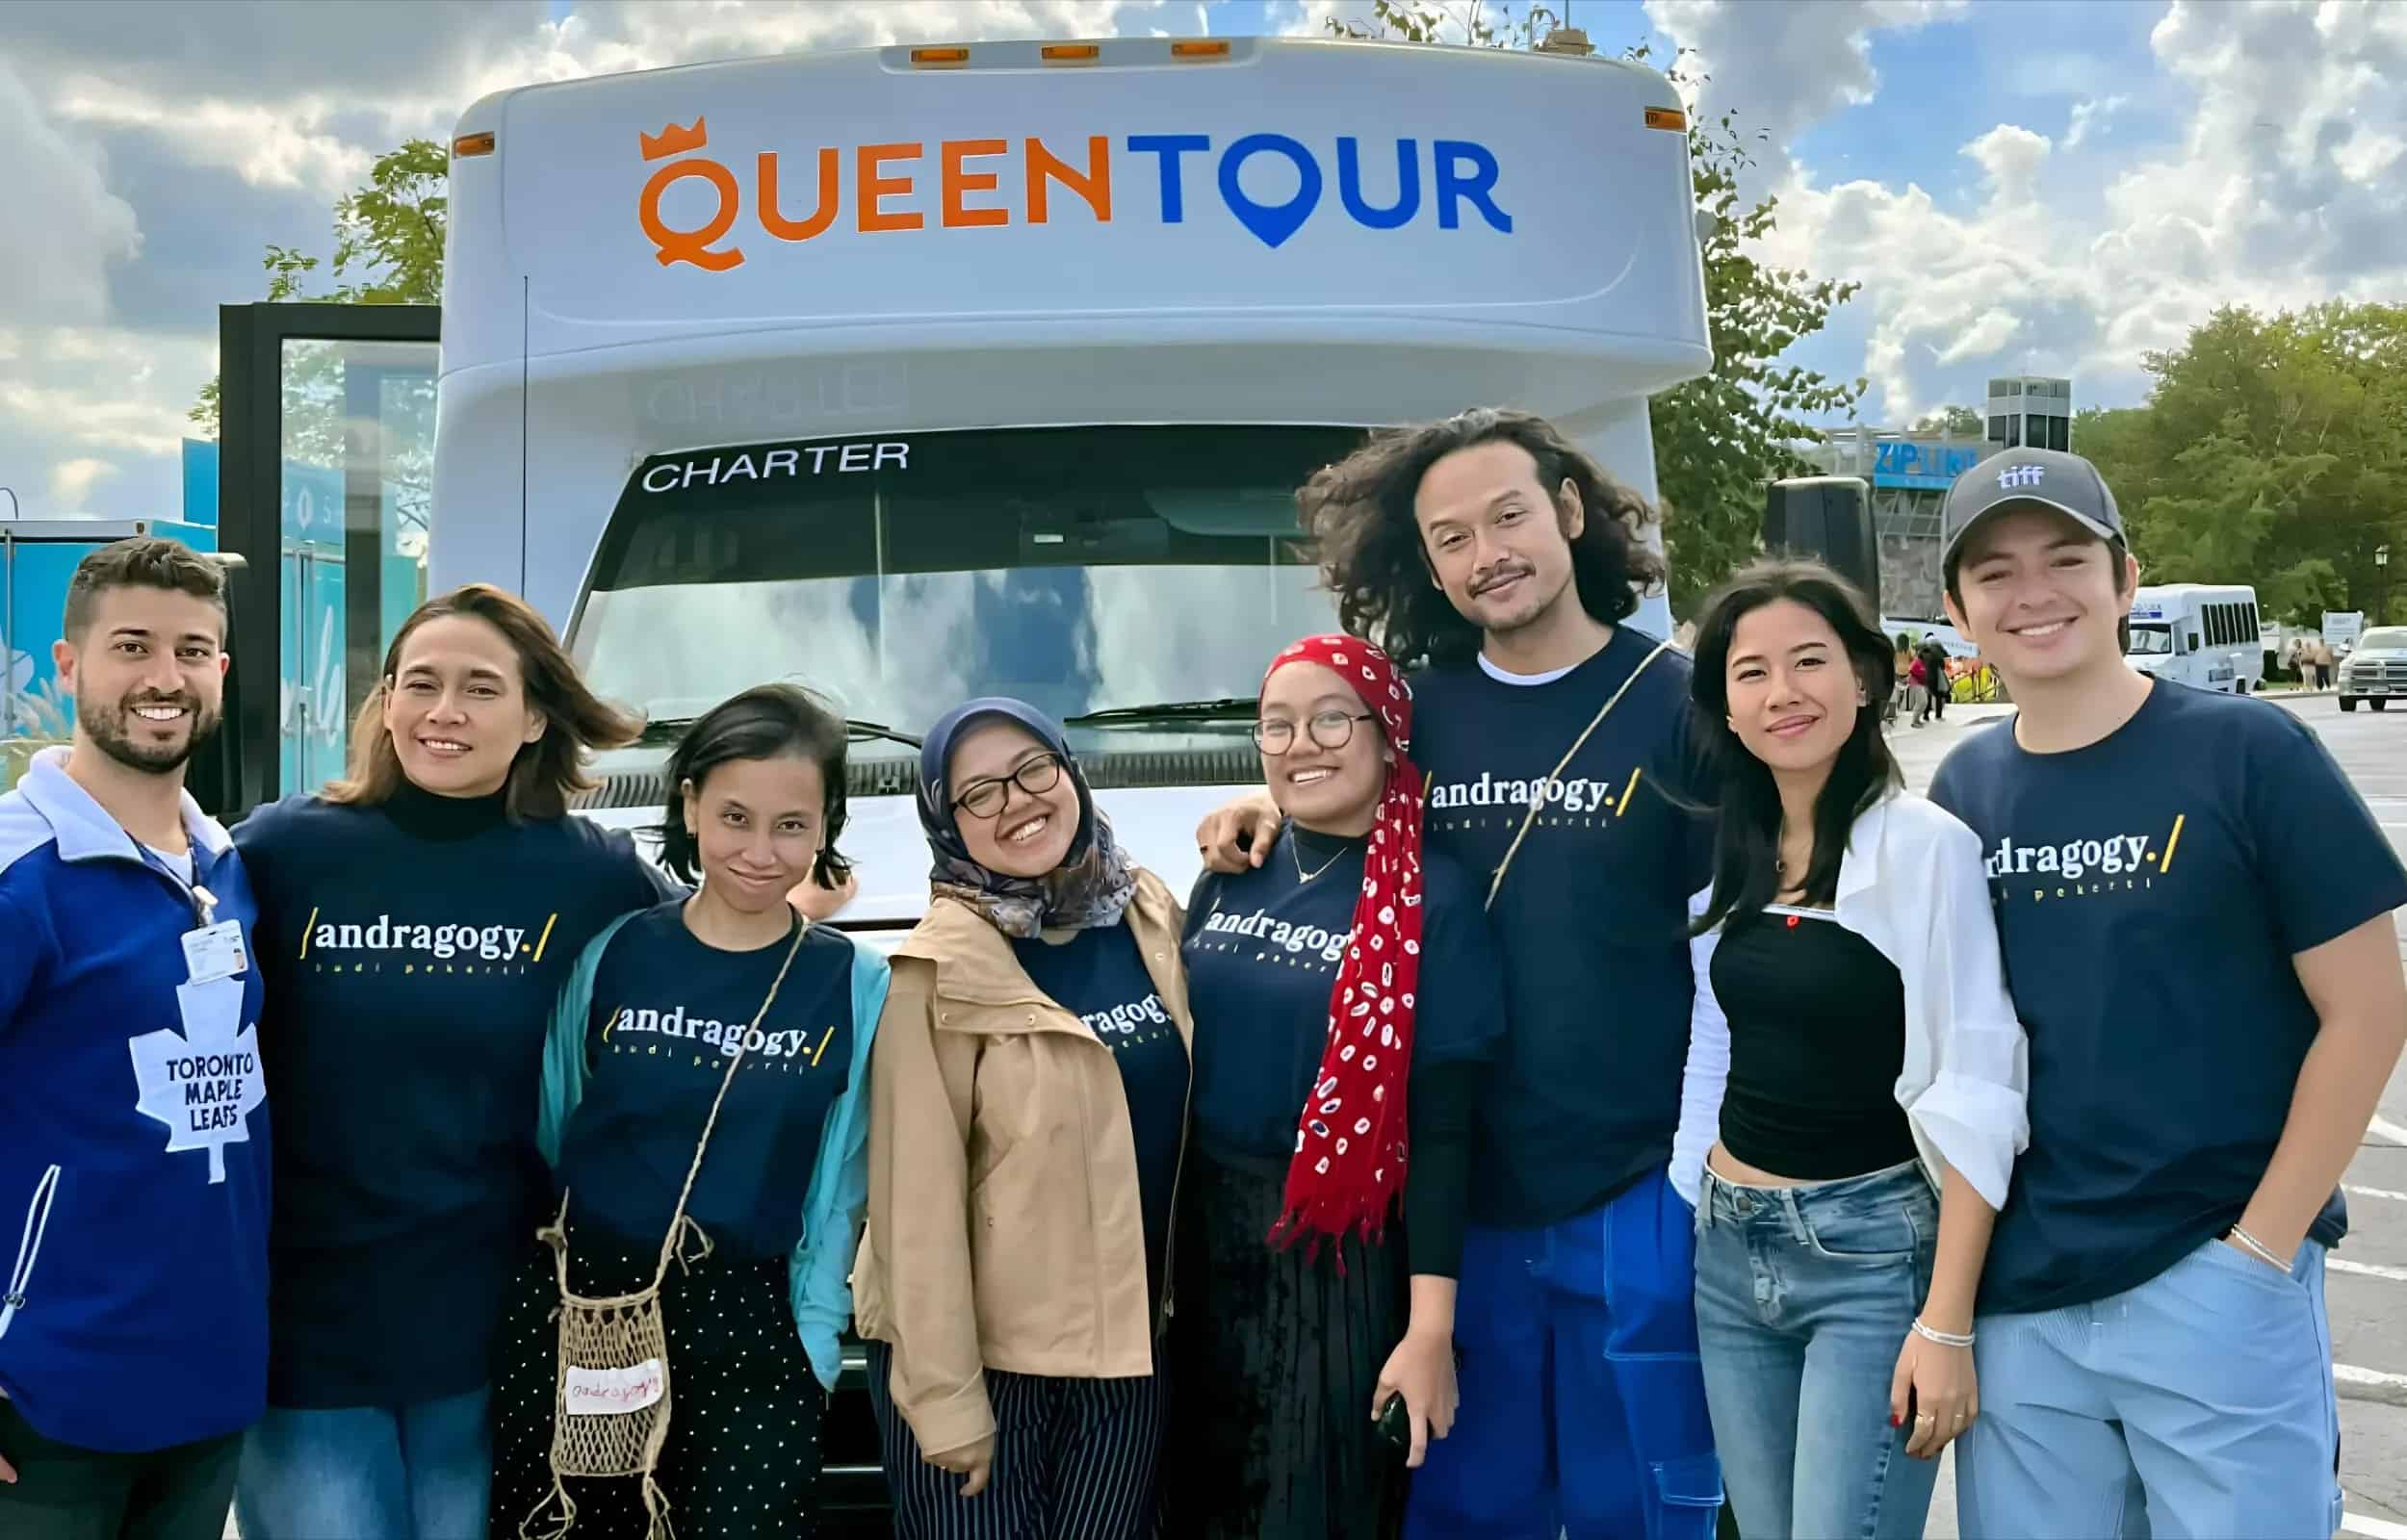 Niagara Falls Tour Group with Queen Tour From Toronto